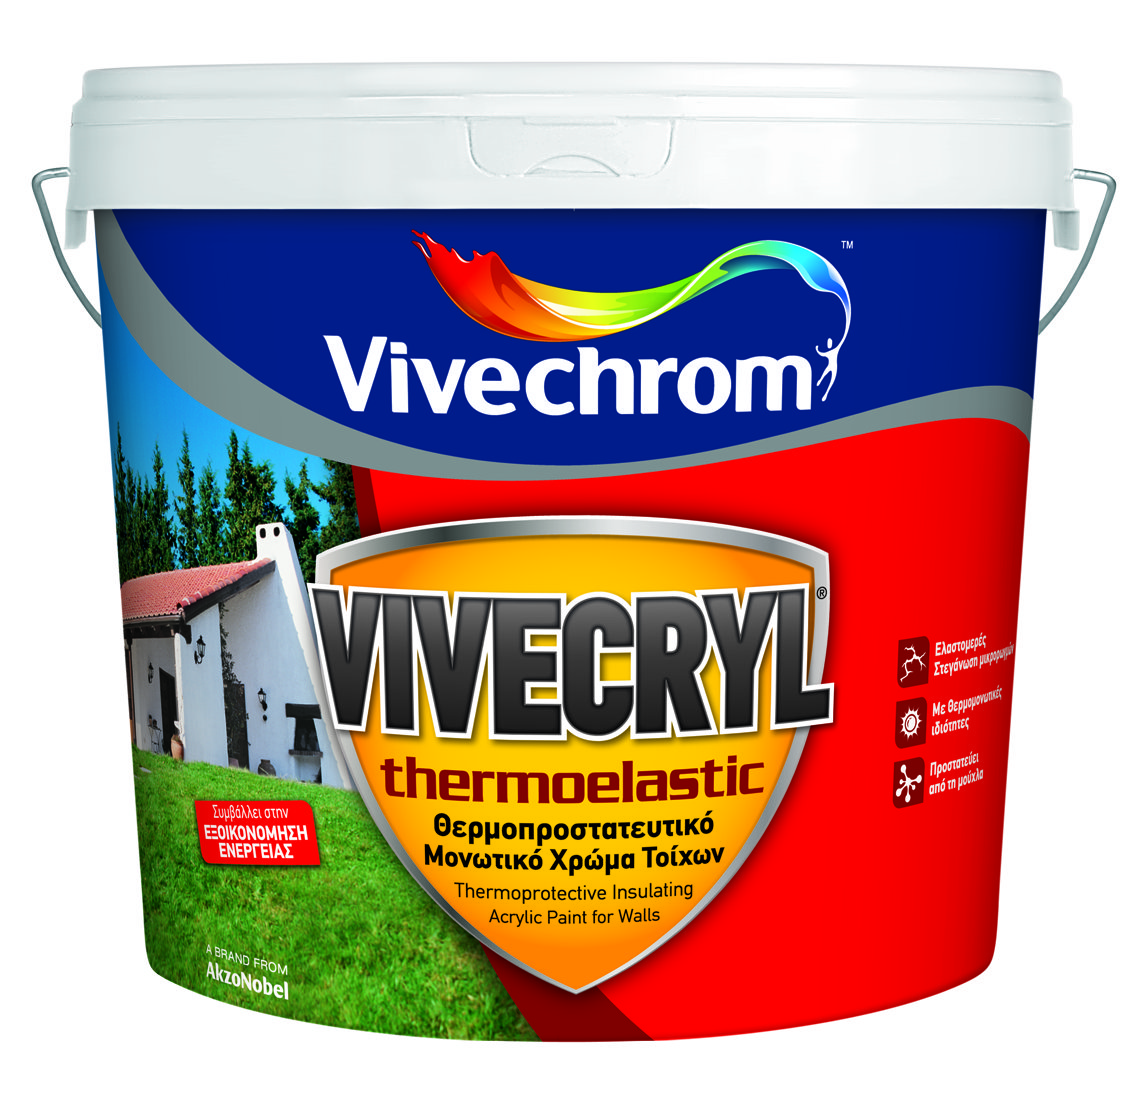 Vivechrom Vivecry Θερμοπροστατευτικό Οικολογικό Ακρυλικό Χρώμα Matt Finish Λευκό 3L